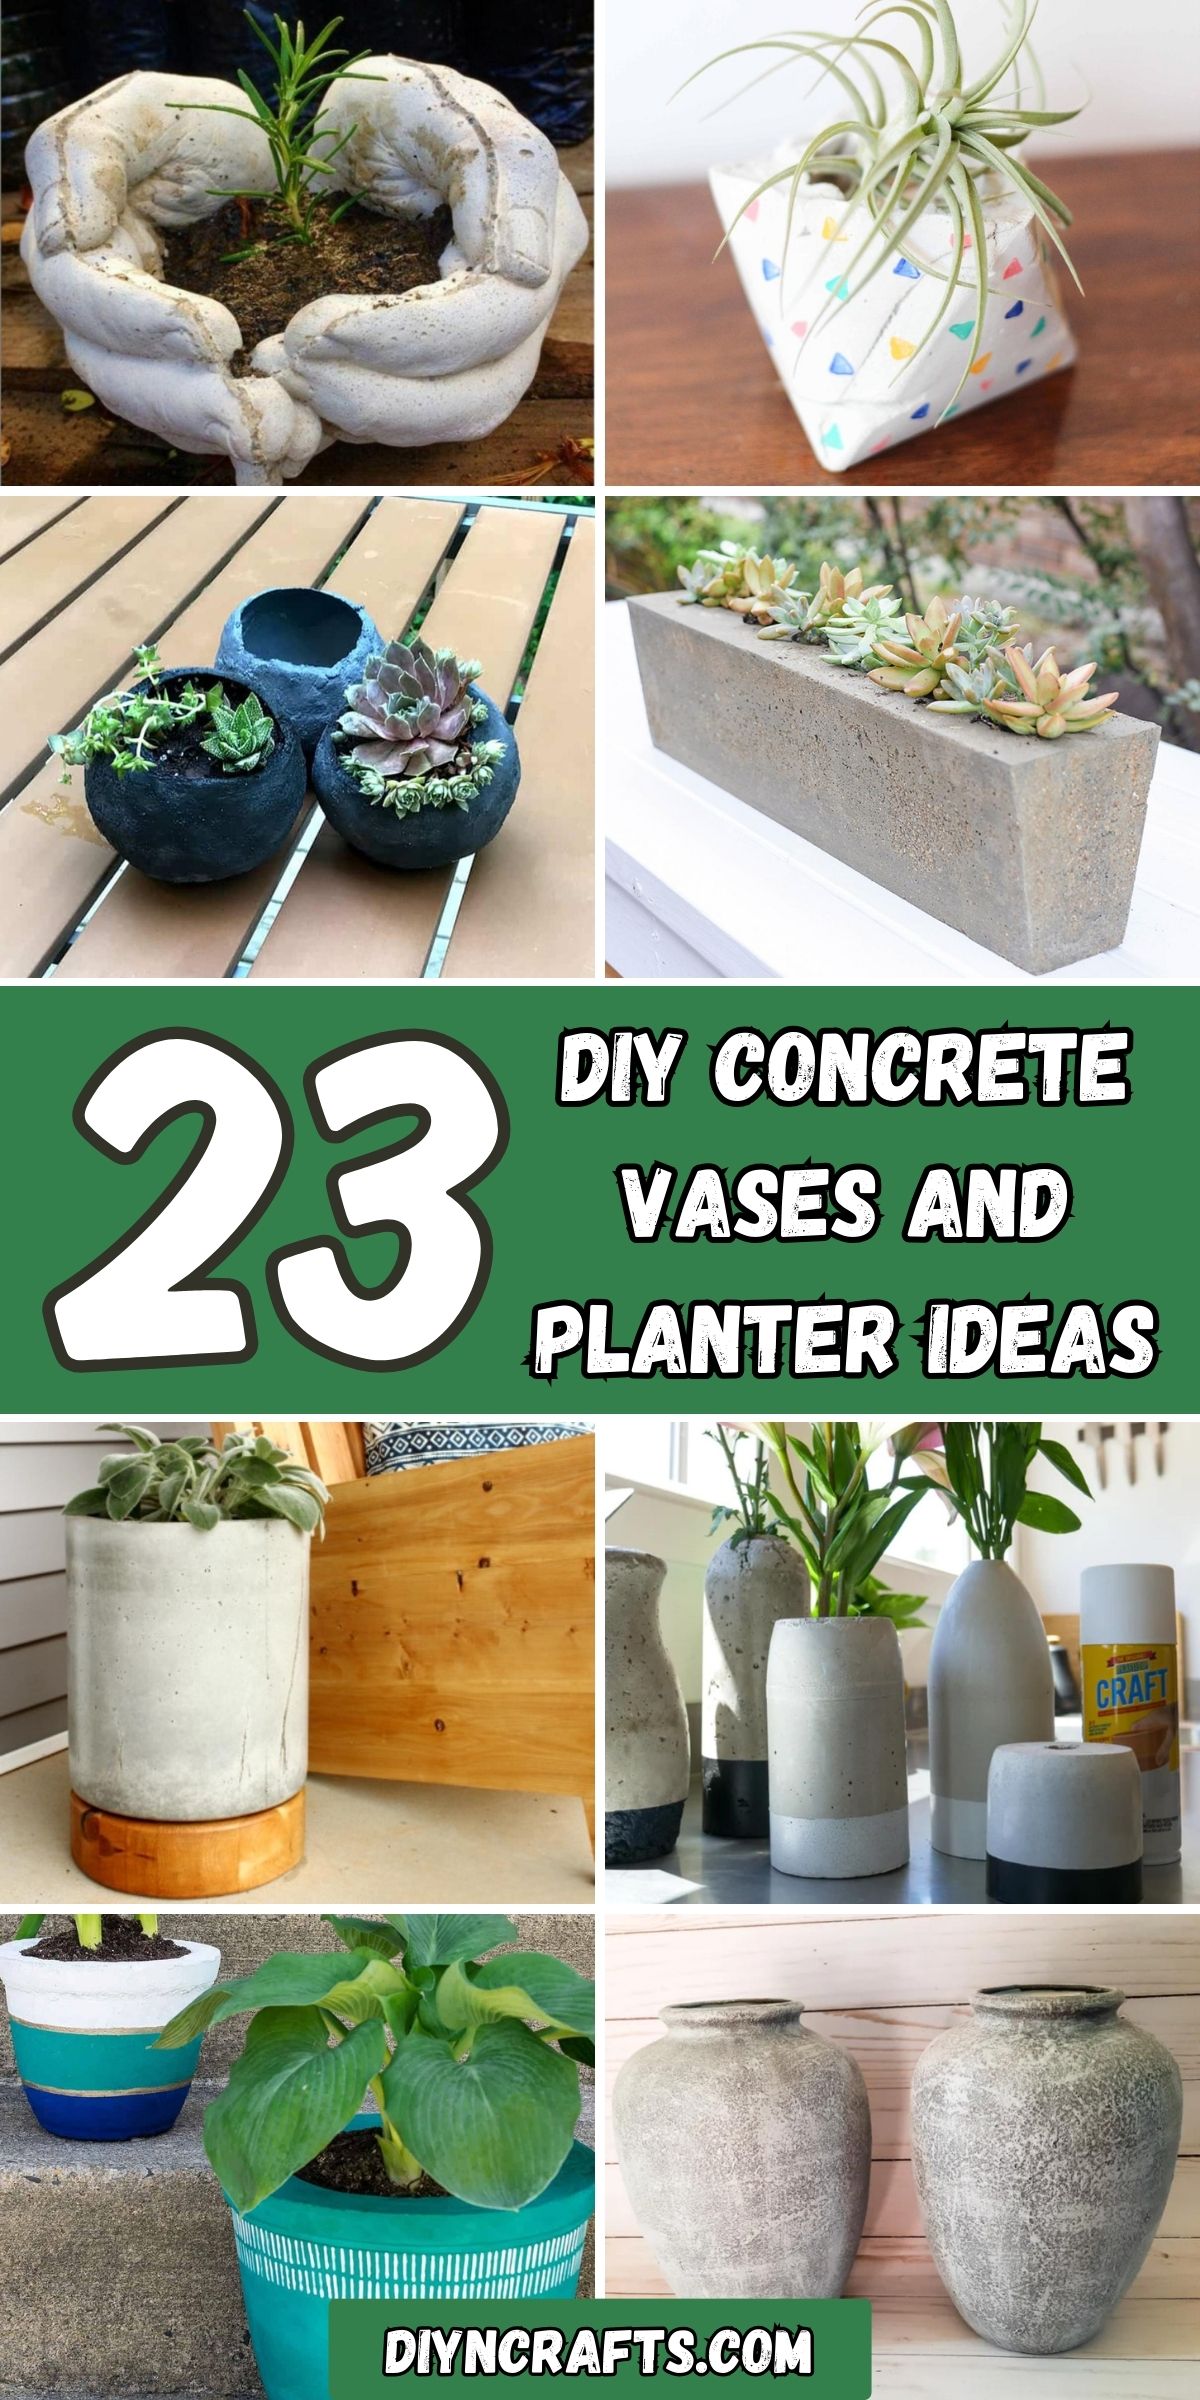 23 DIY Concrete Vases and Planter Ideas collage.